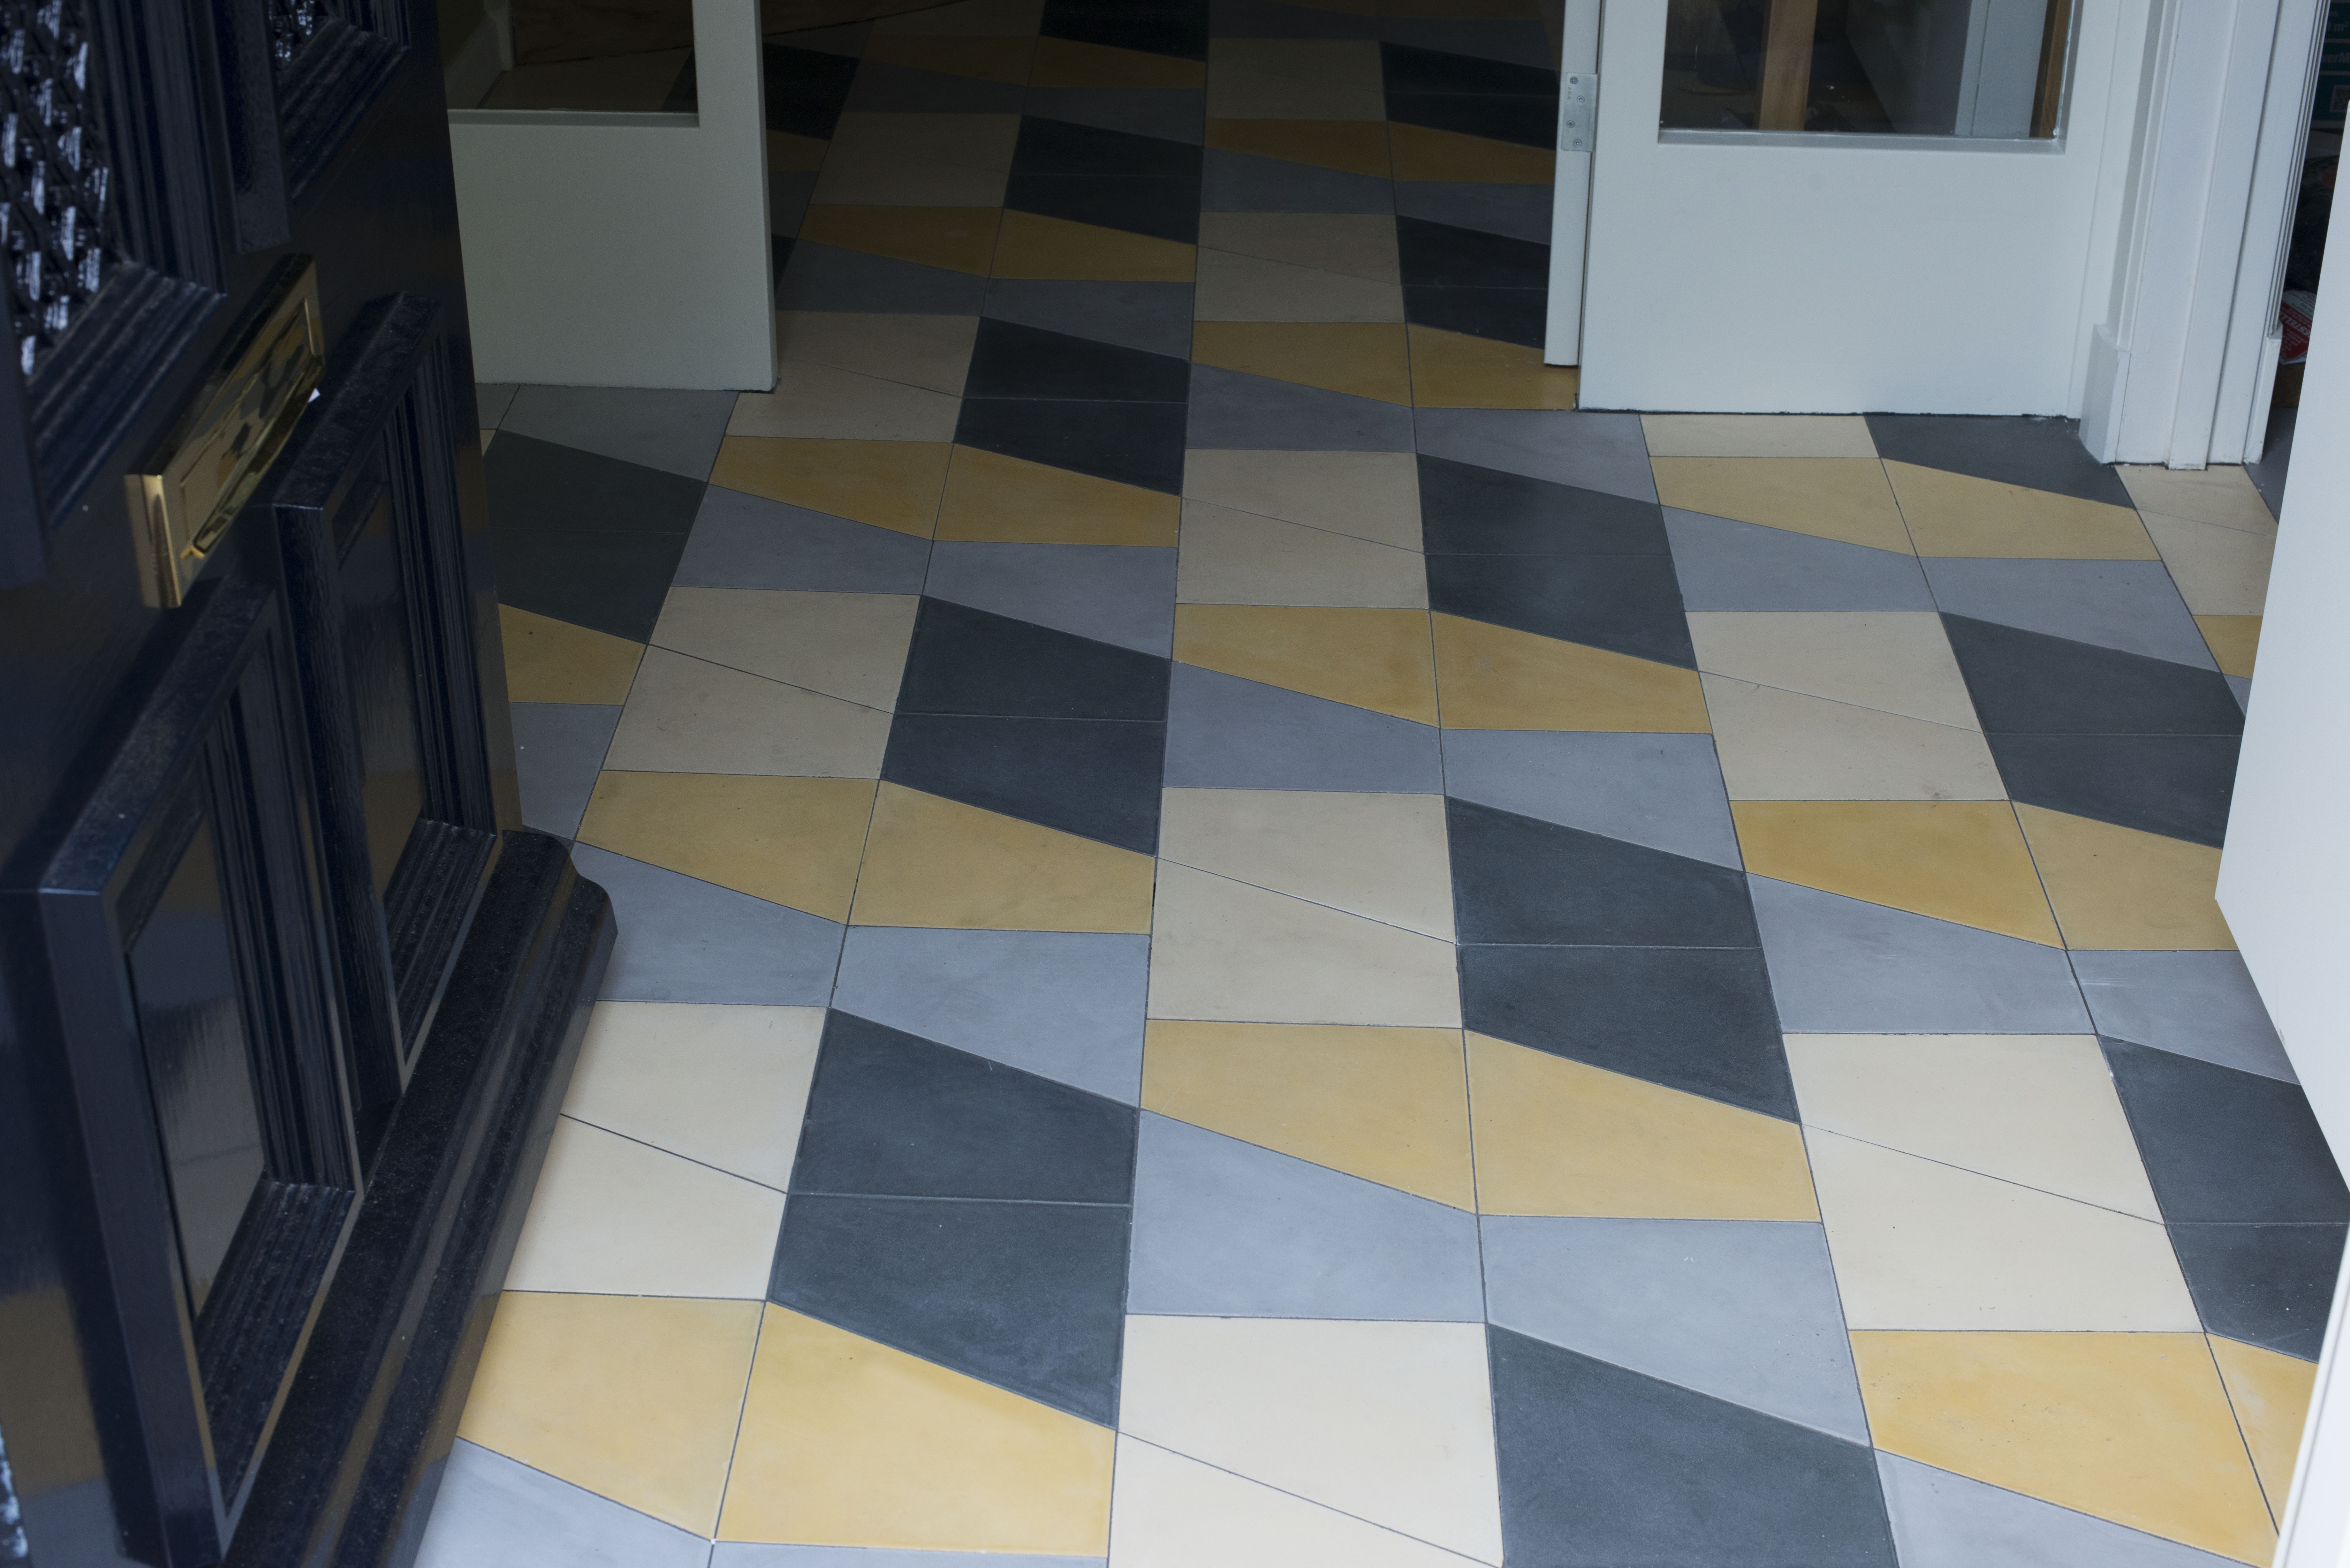 Bespoke Huguet / Typotheque tiles, custom colours